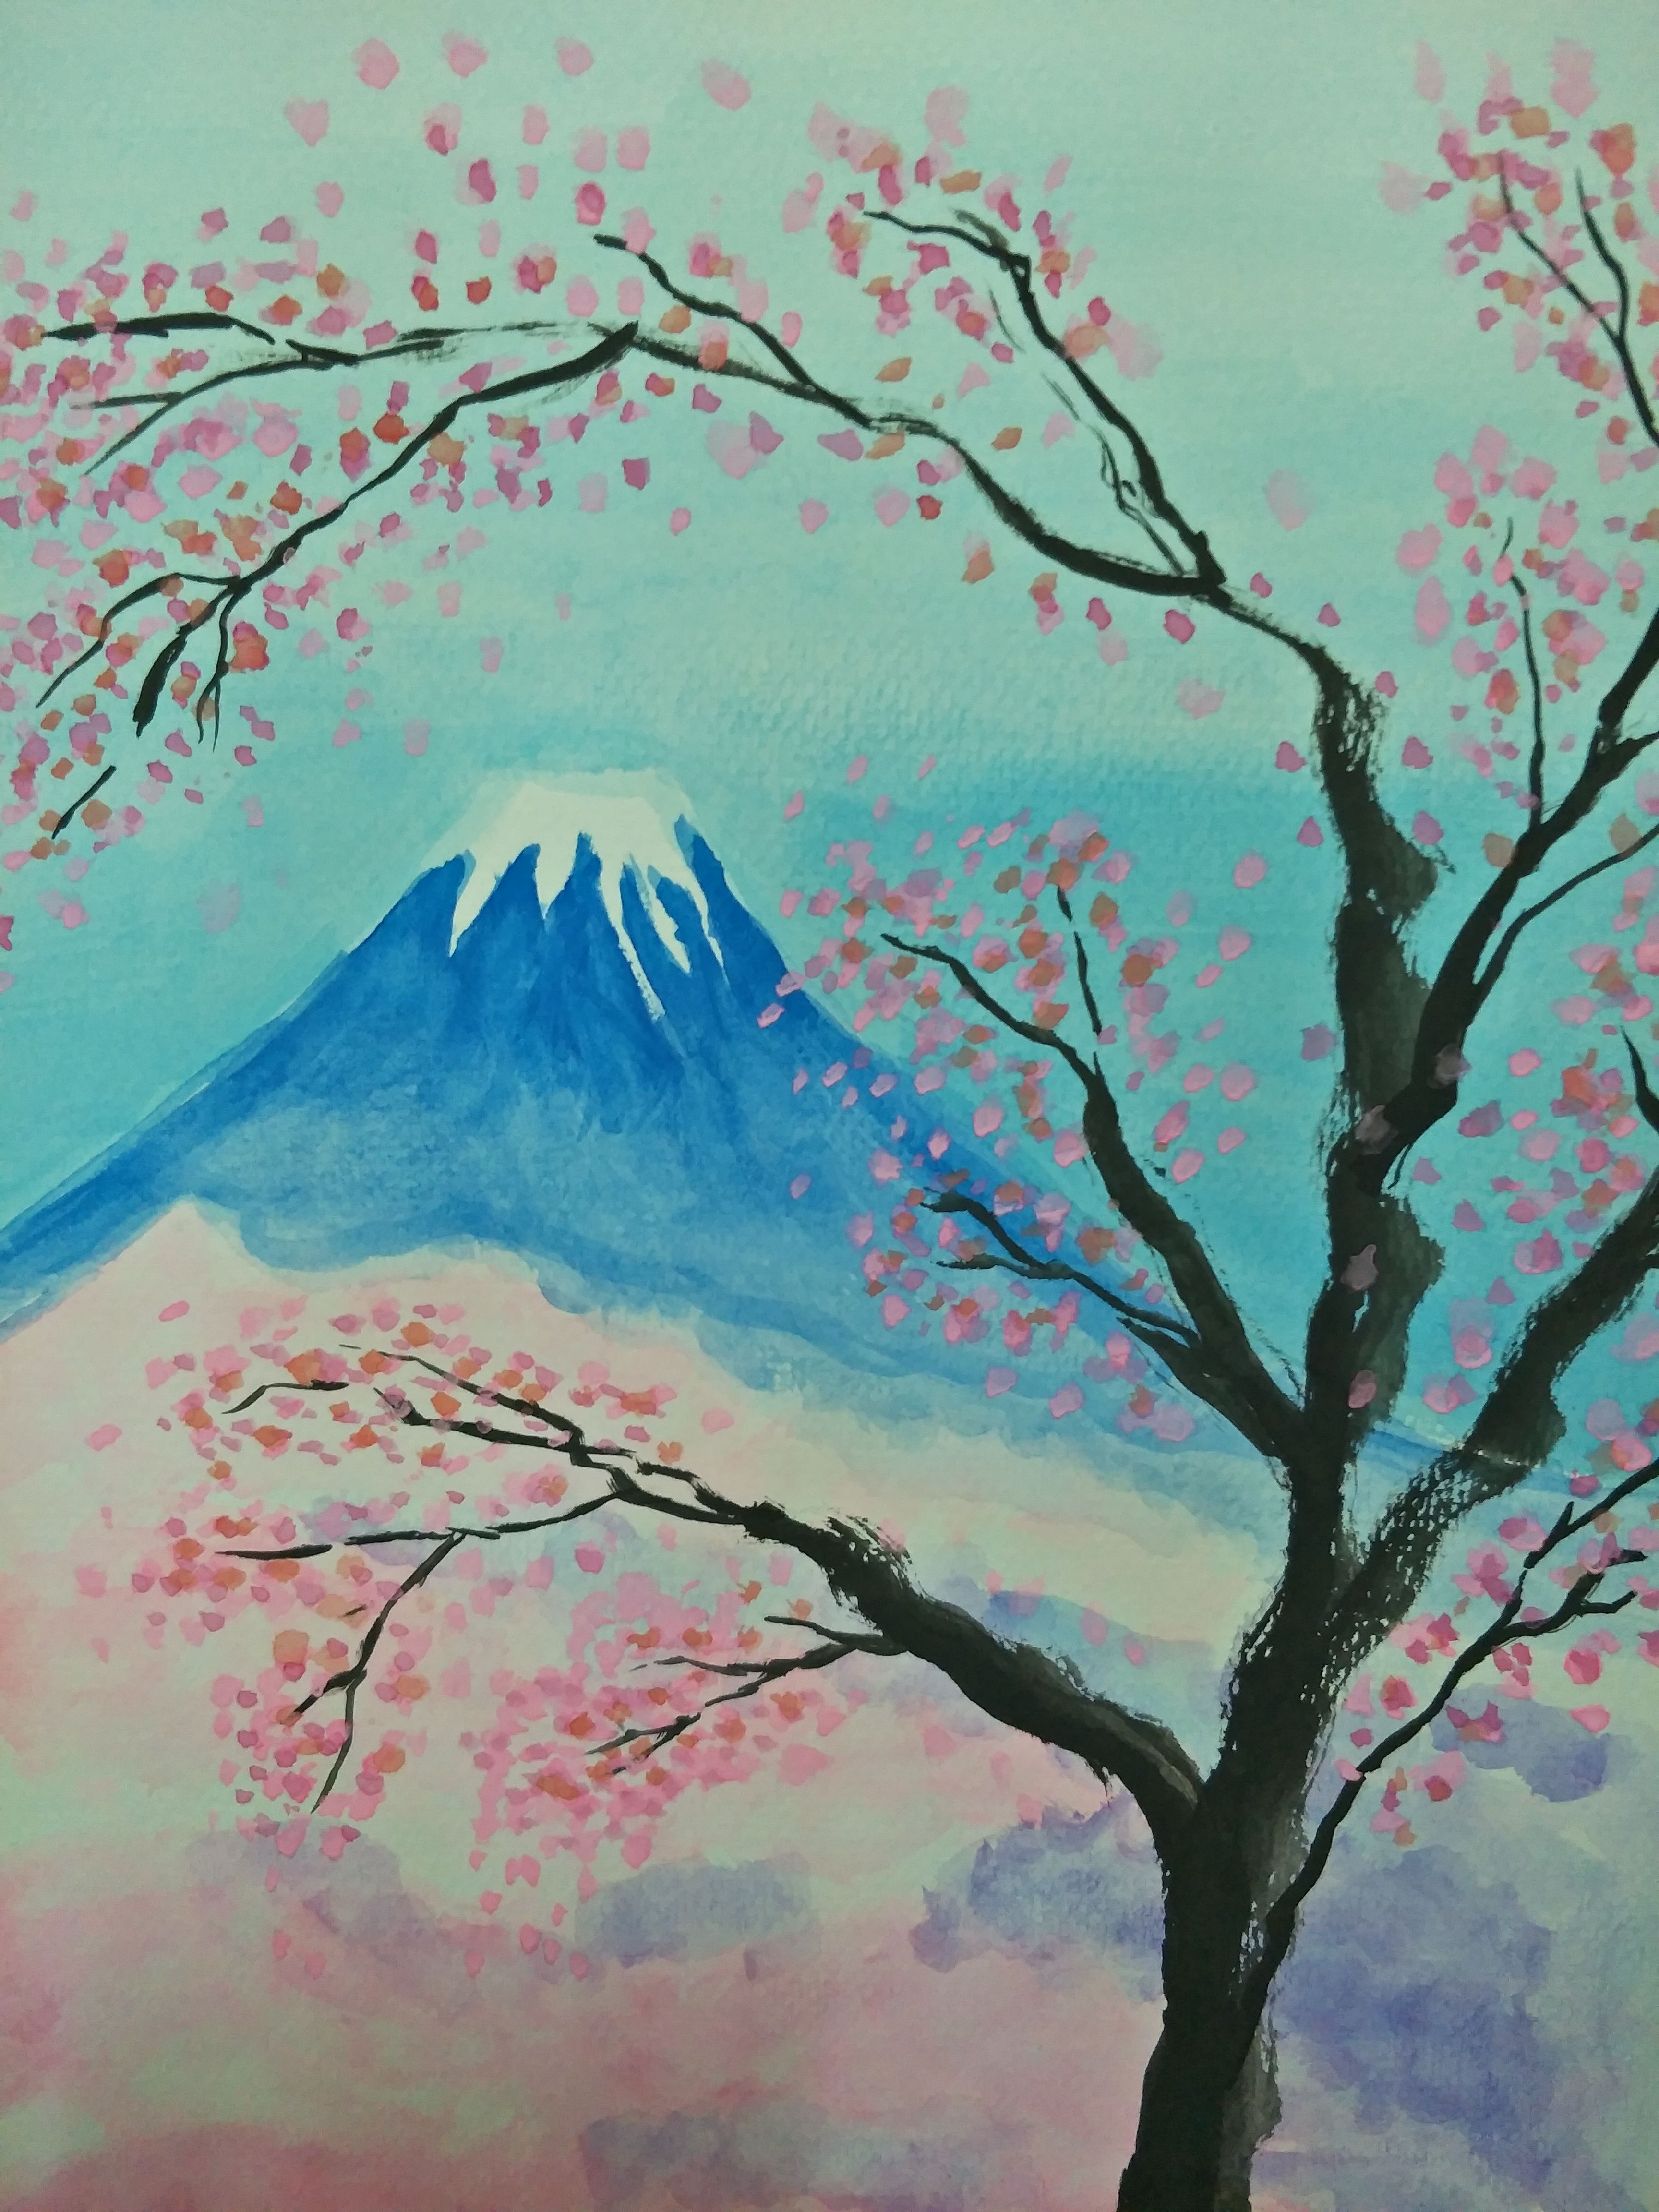 Mt Fuji Drawing at Explore collection of Mt Fuji